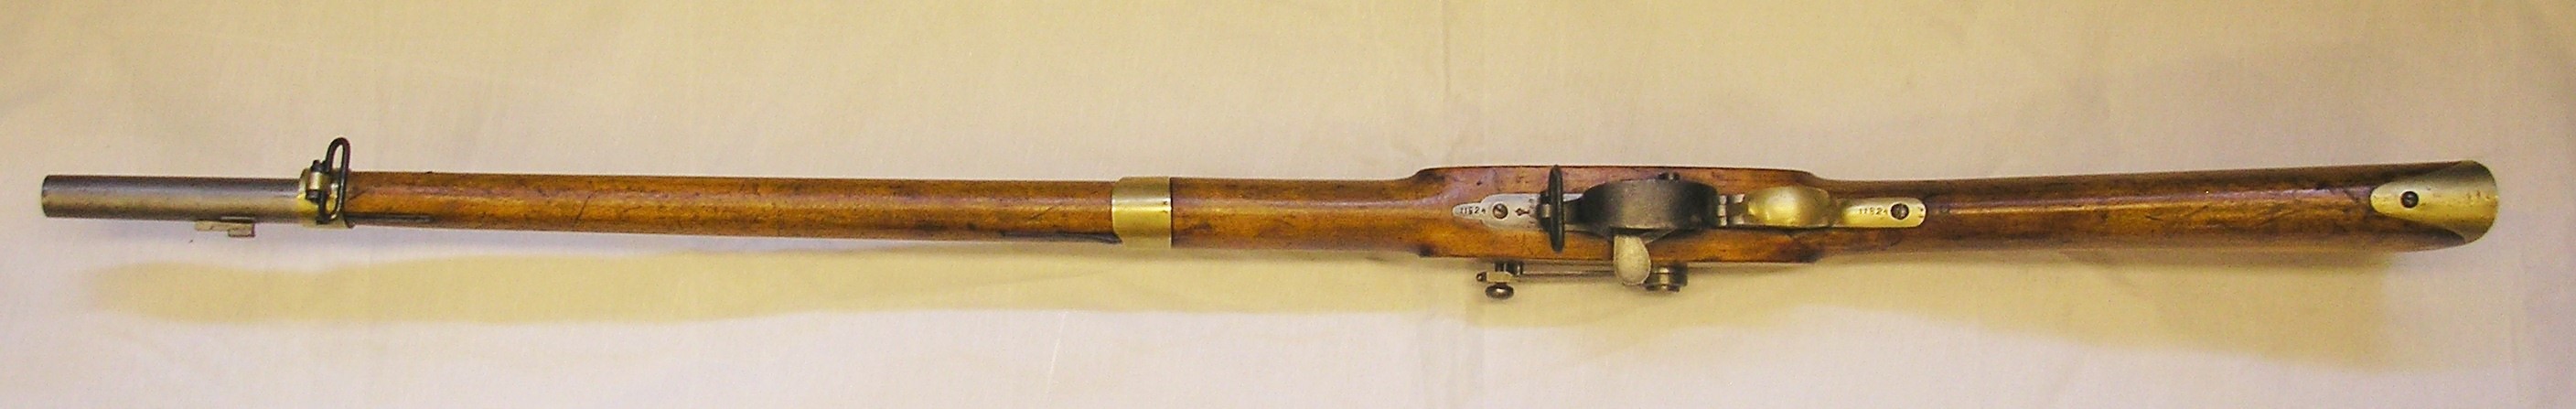 ./guns/rifle/bilder/Rifle-Kongsberg-Kammerlader-M1859-11824-3.JPG